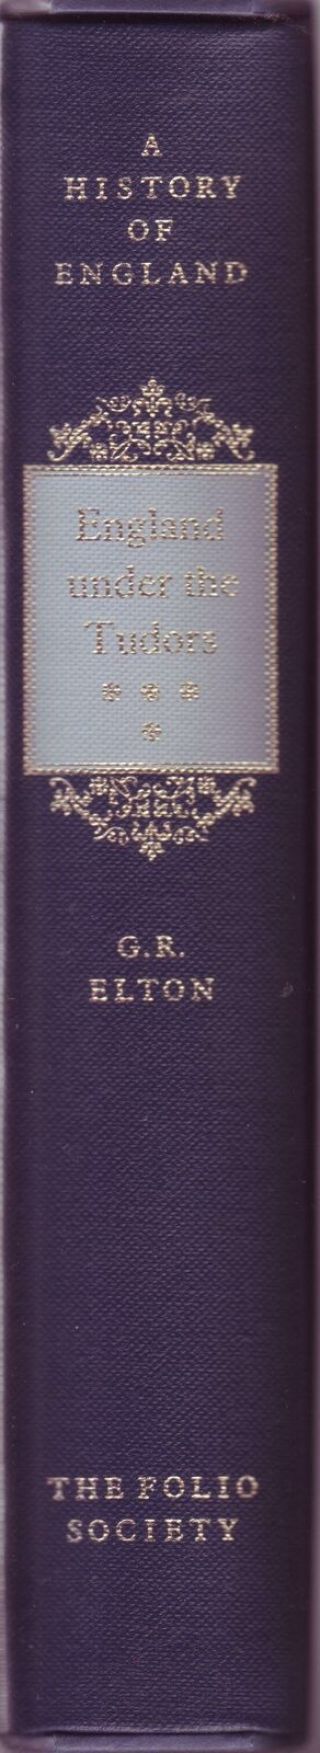 England Under The Tudors by GR Elton - Folio Society 1999 3